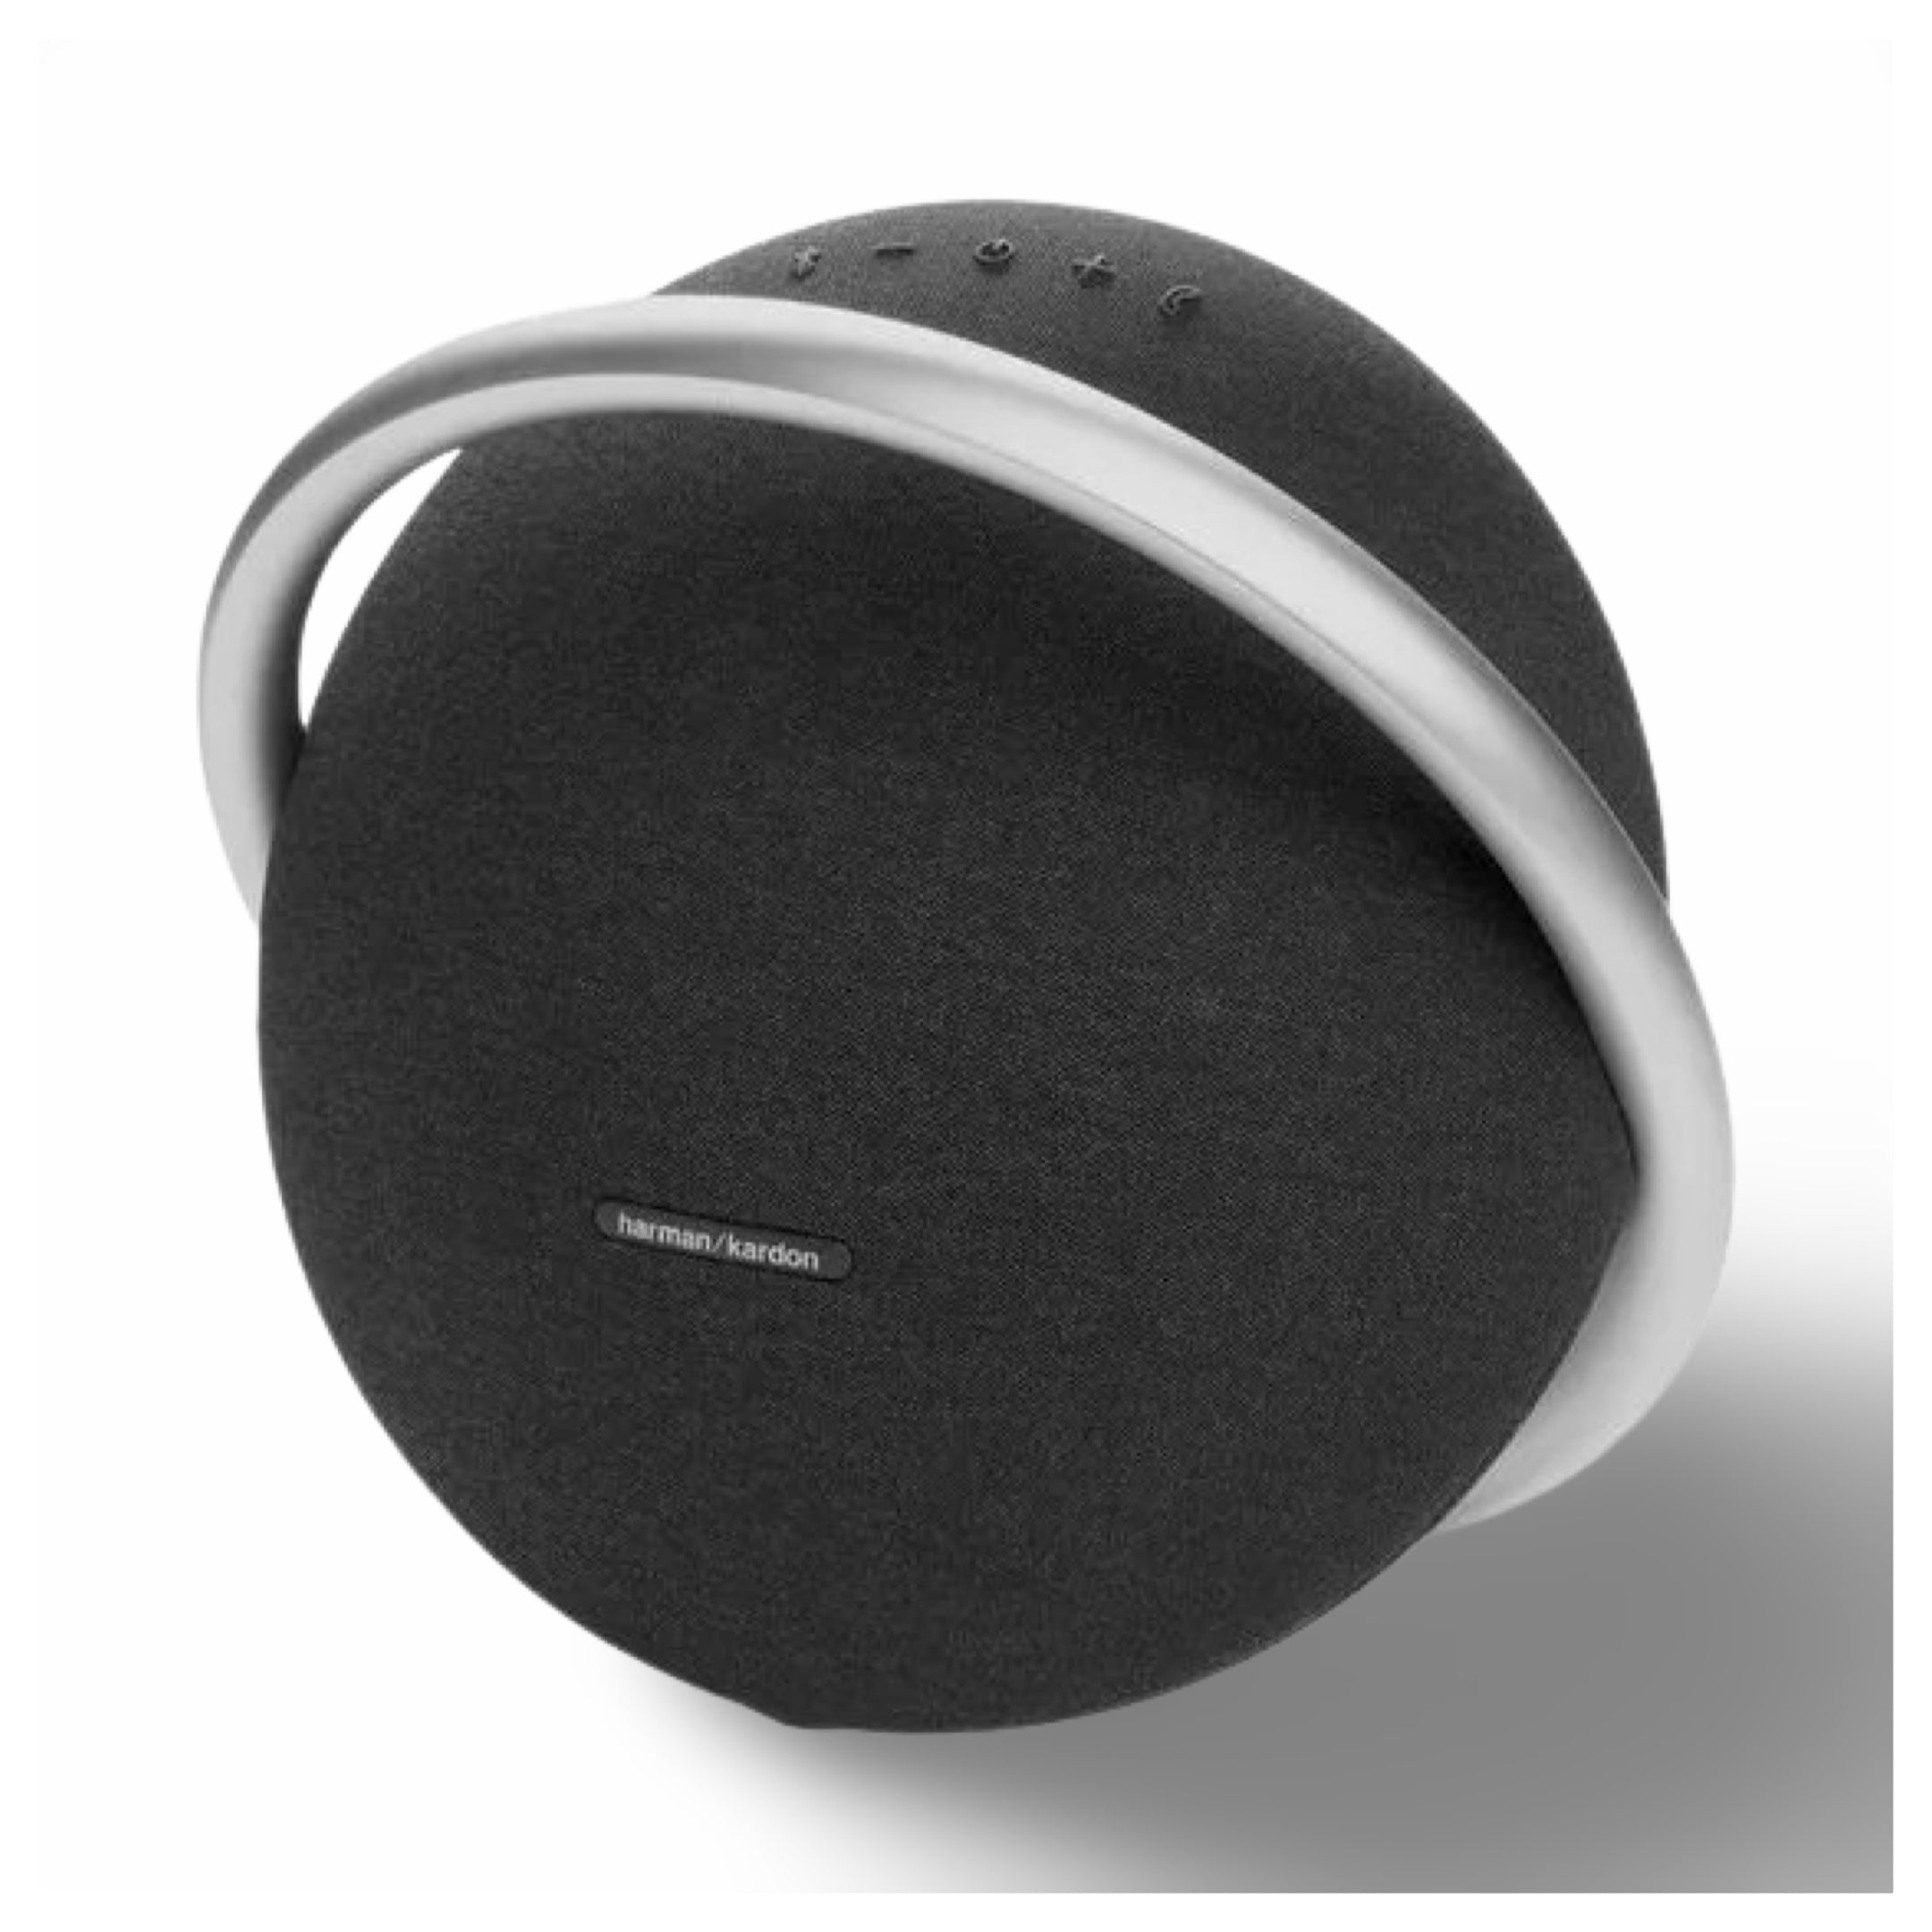 Onyx Studio 7  Portable Stereo Bluetooth Speaker